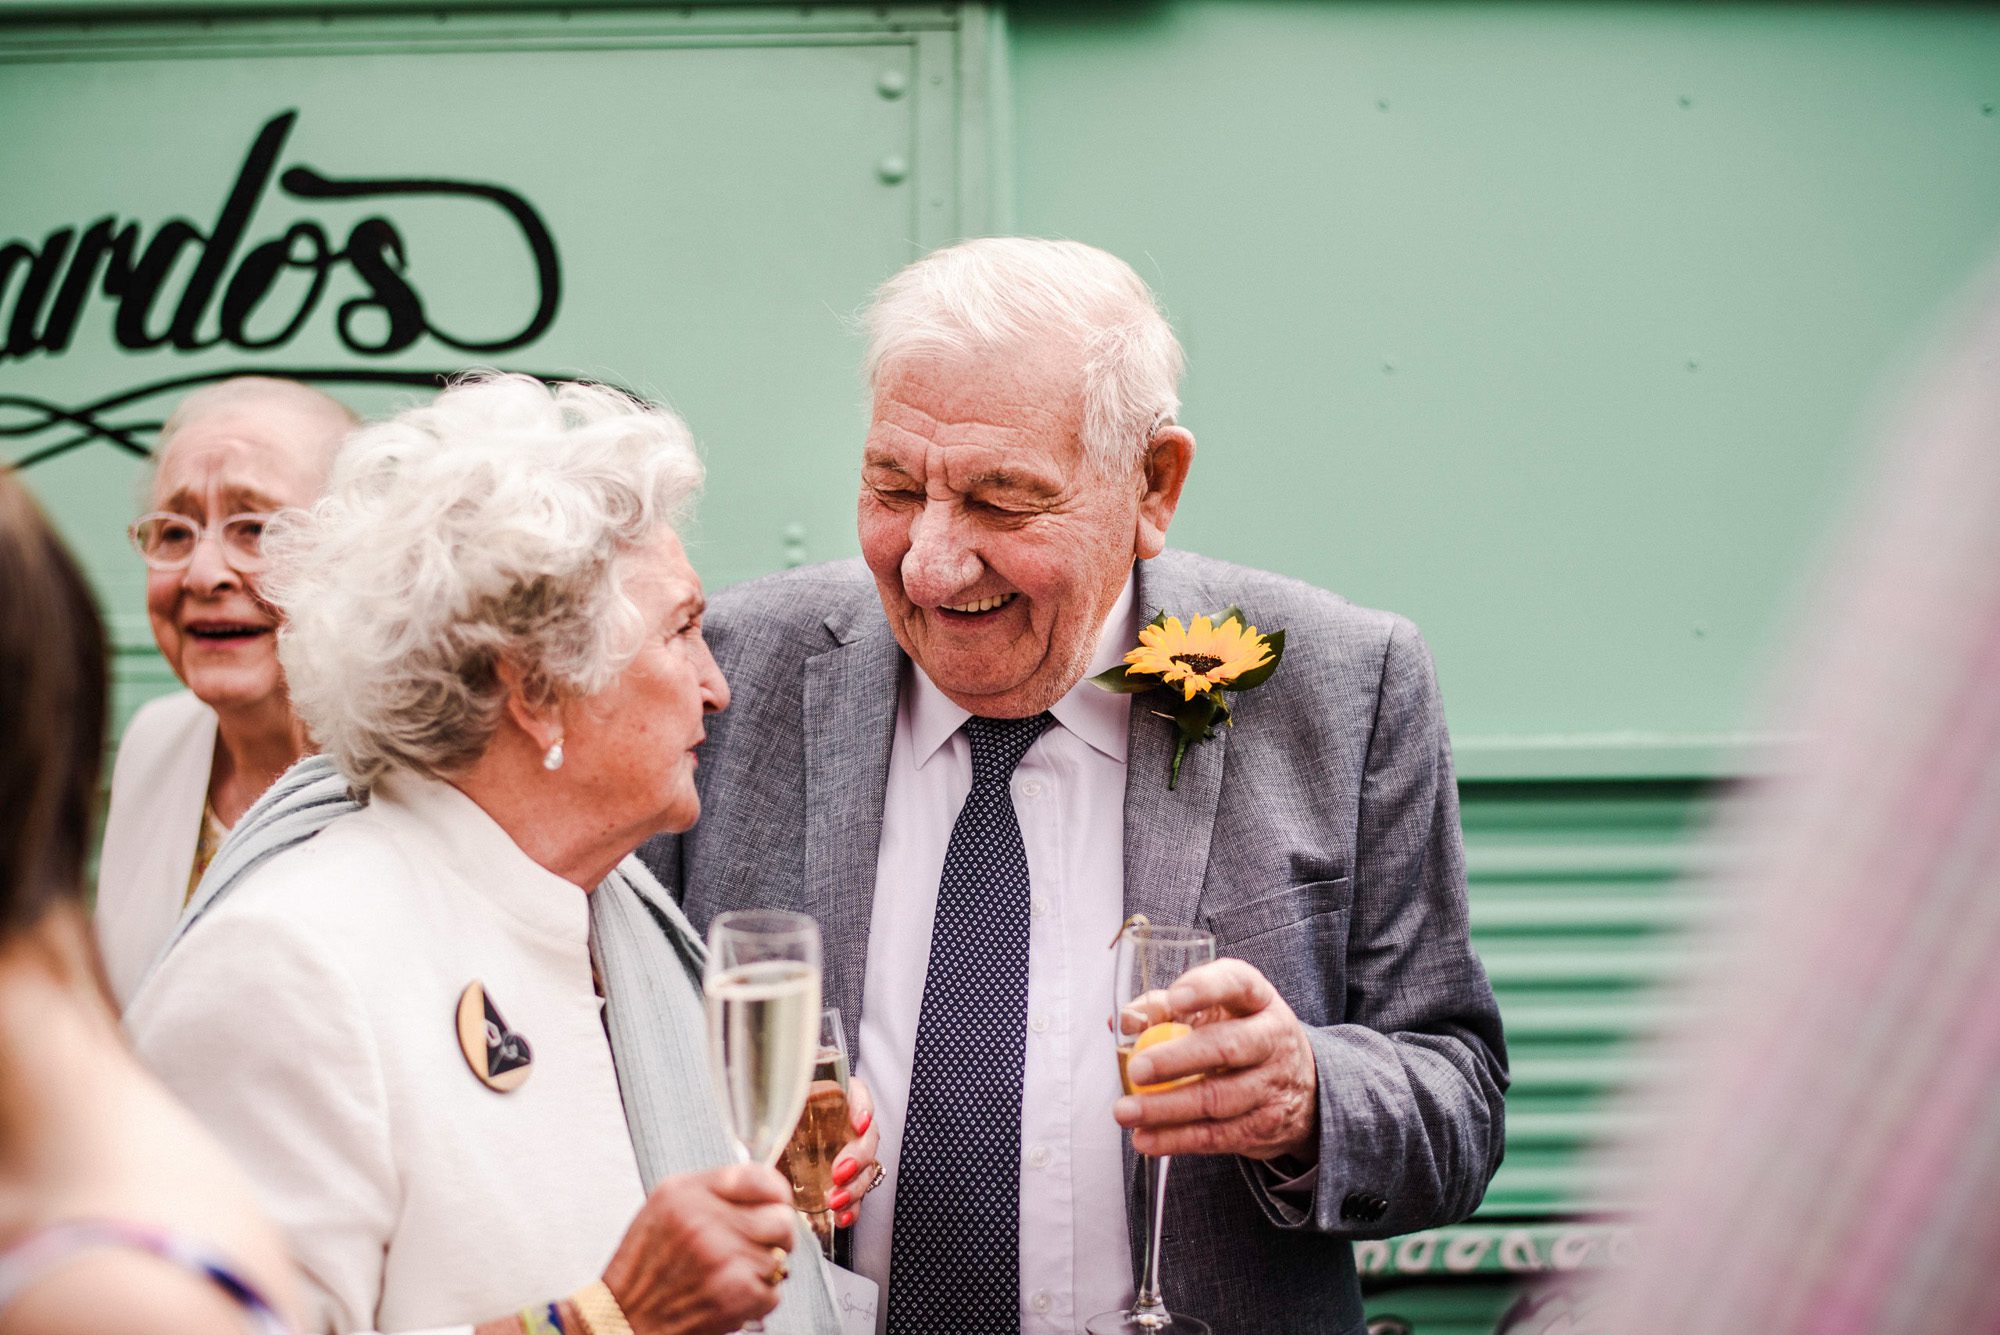 Grandparents at festival wedding